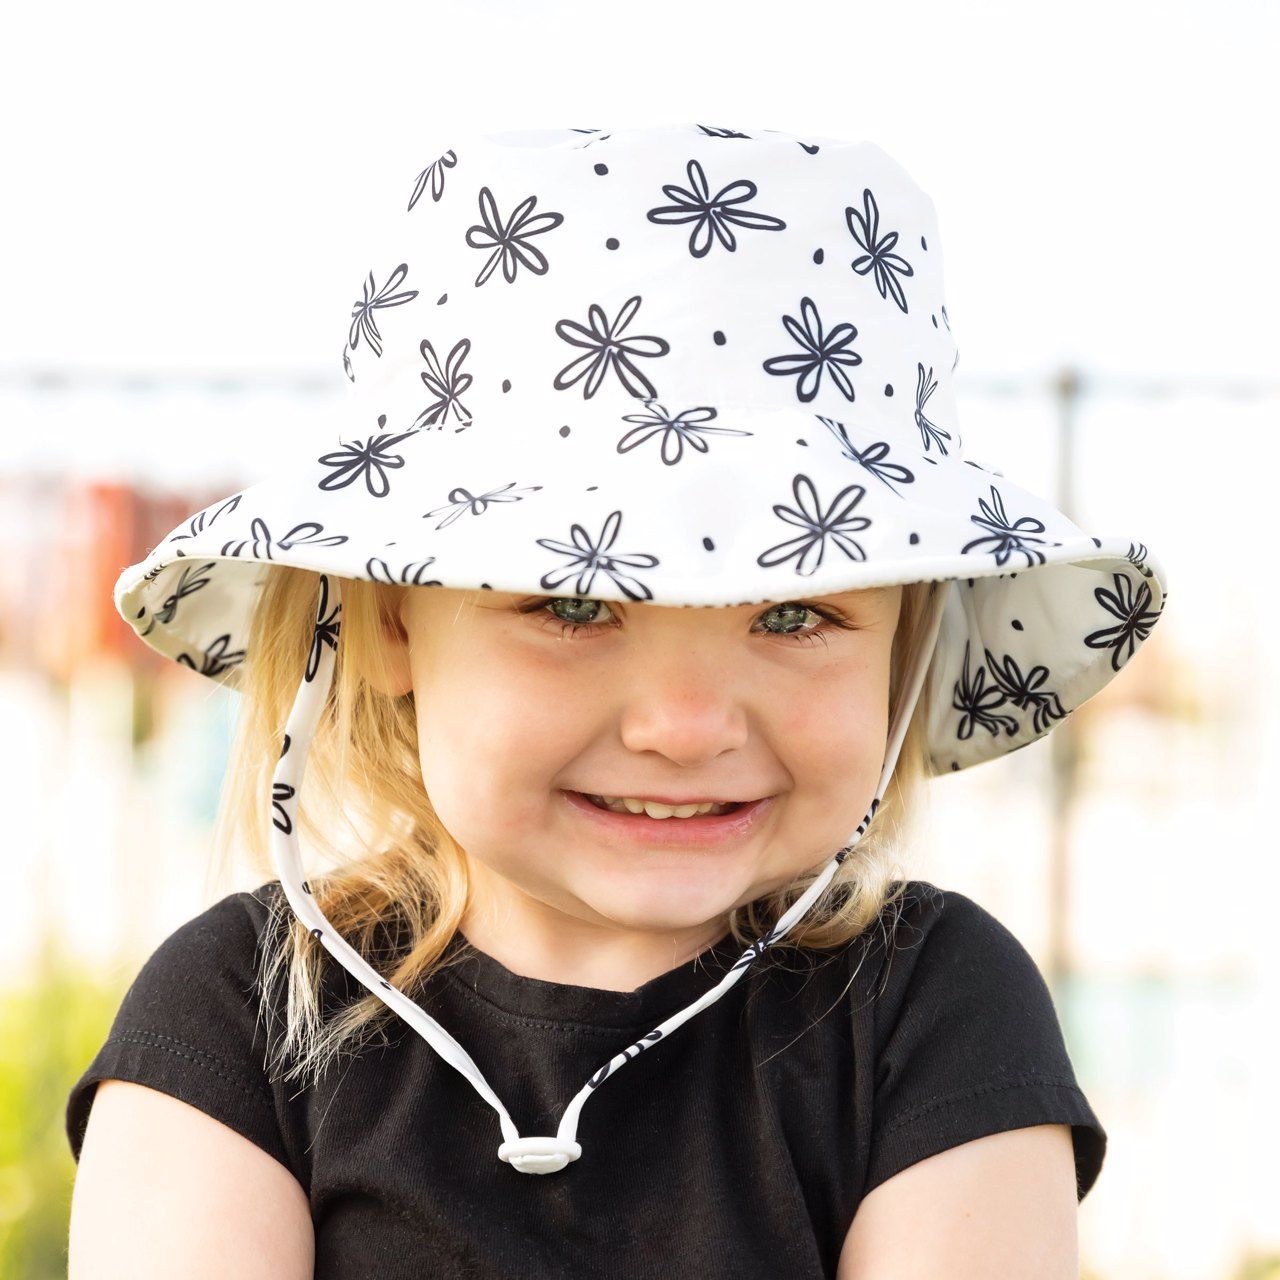 Tiny Twinkle - UPF 50+ Kids Sun Bucket Hat - Daisy